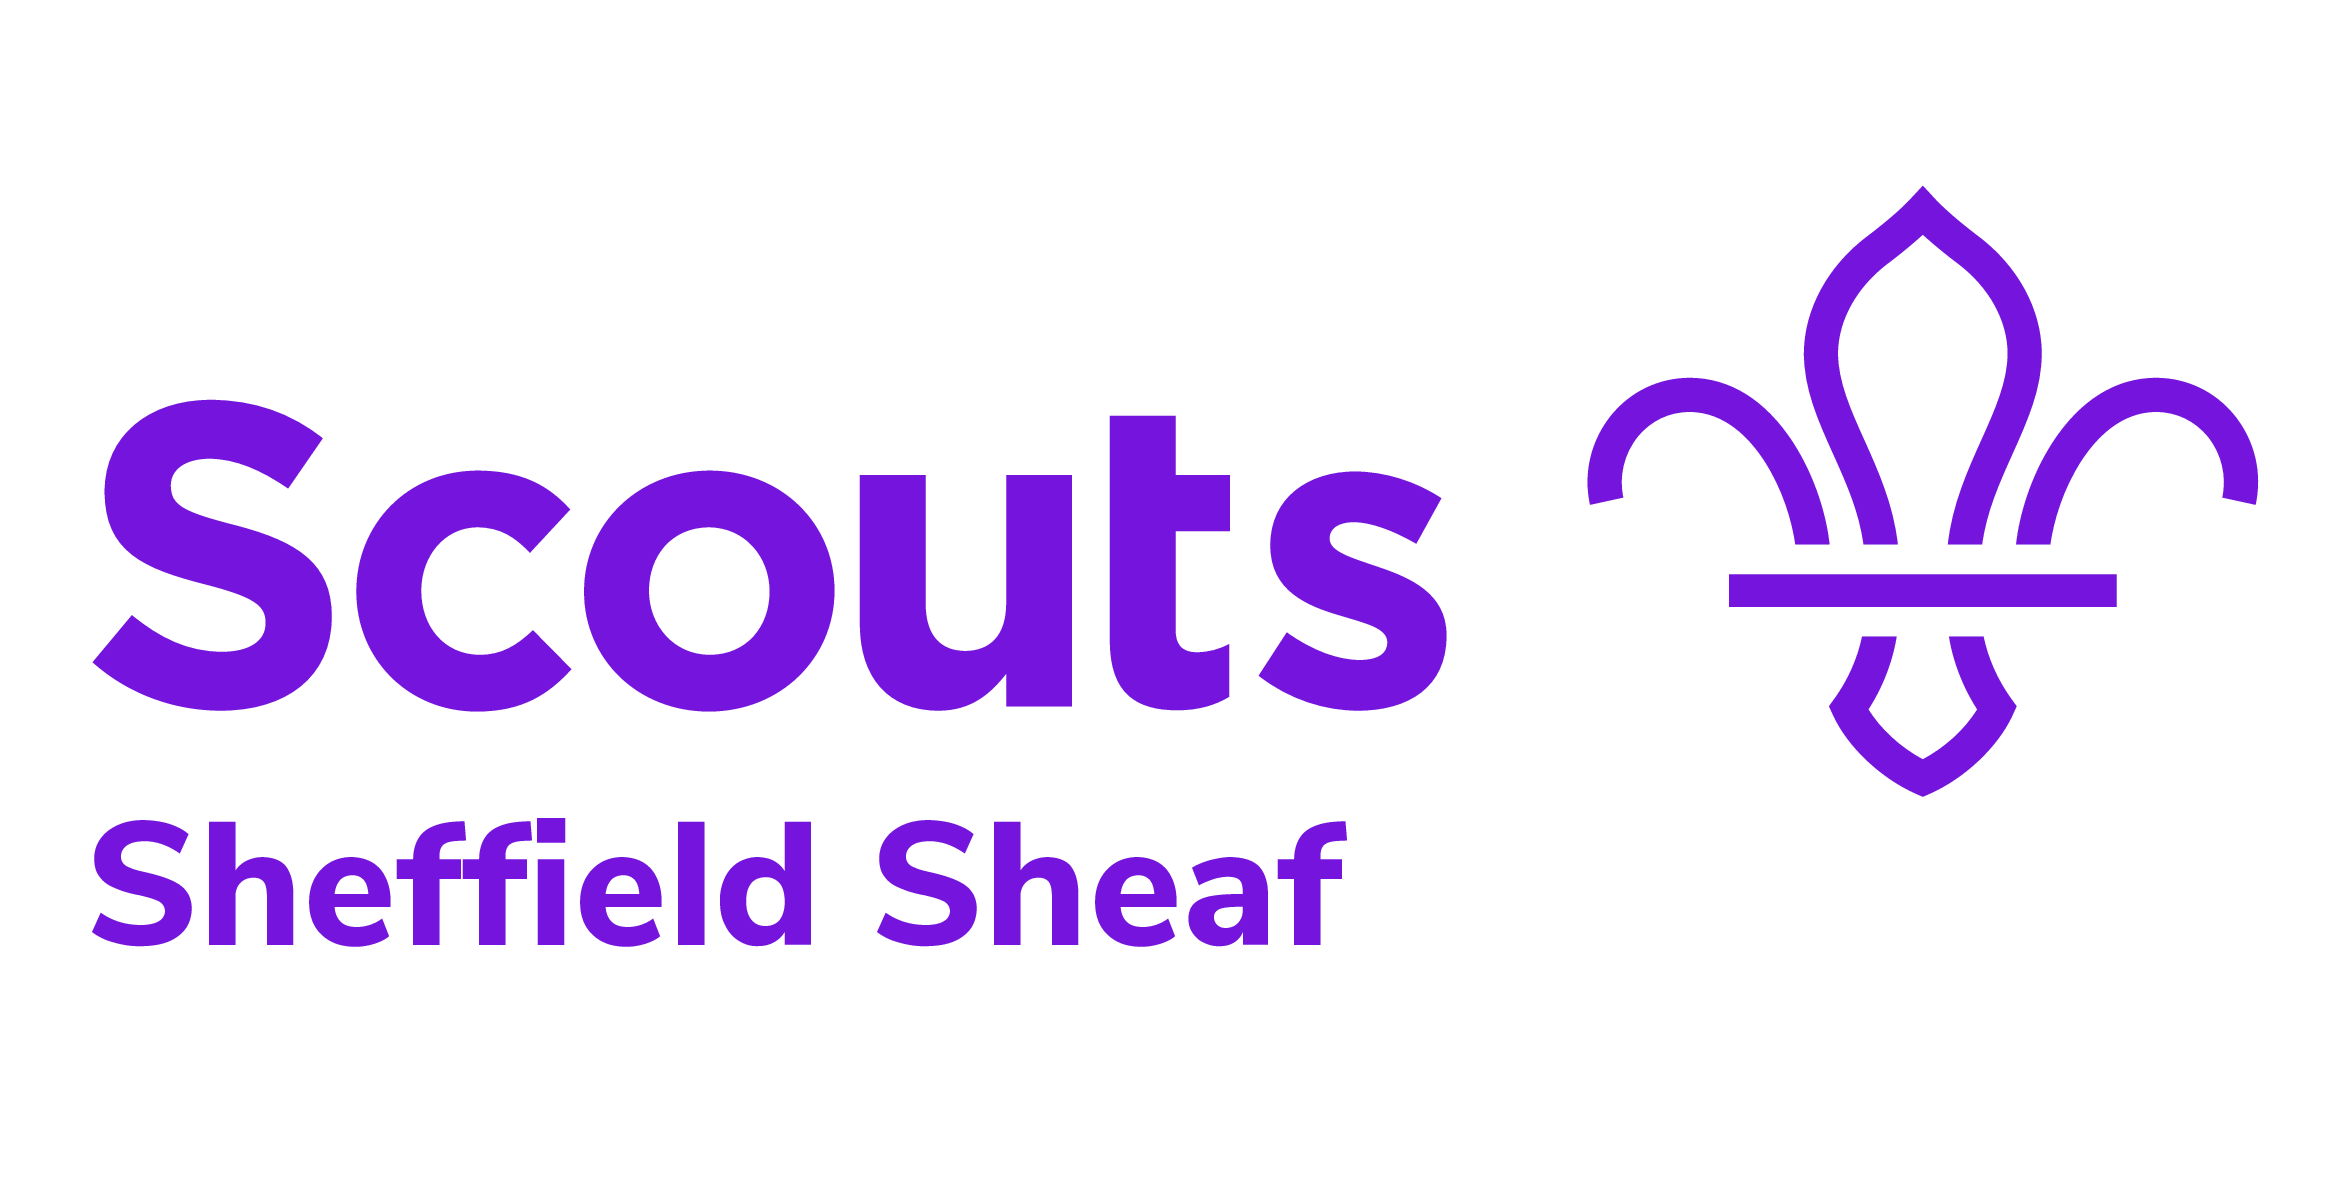 Sheffield Sheaf Scouts